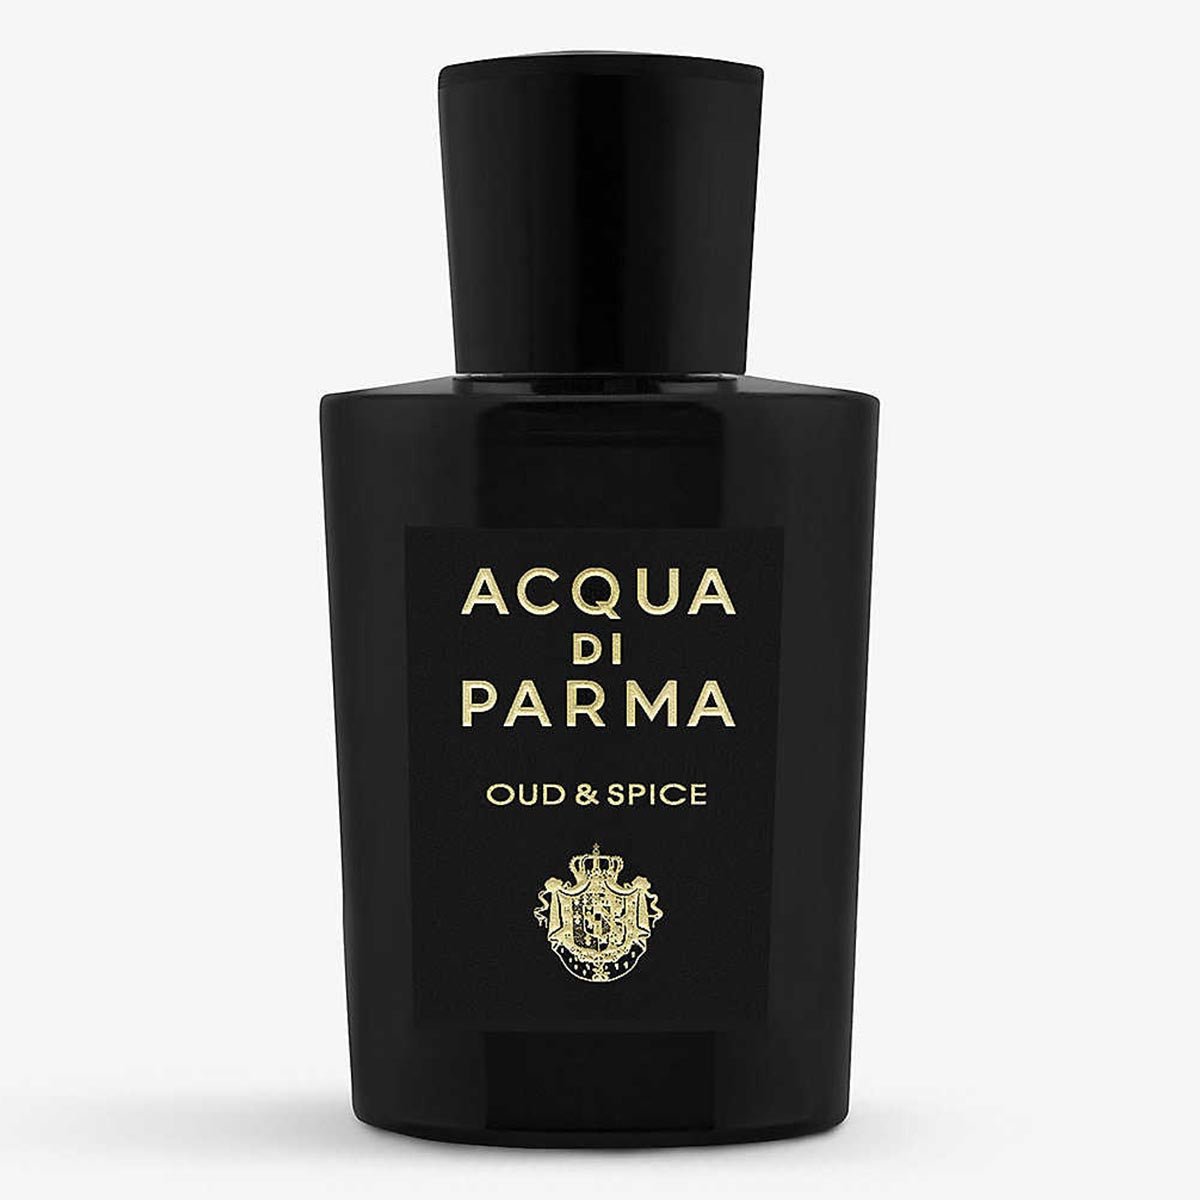 Acqua di Parma Oud & Spice EDP | My Perfume Shop Australia